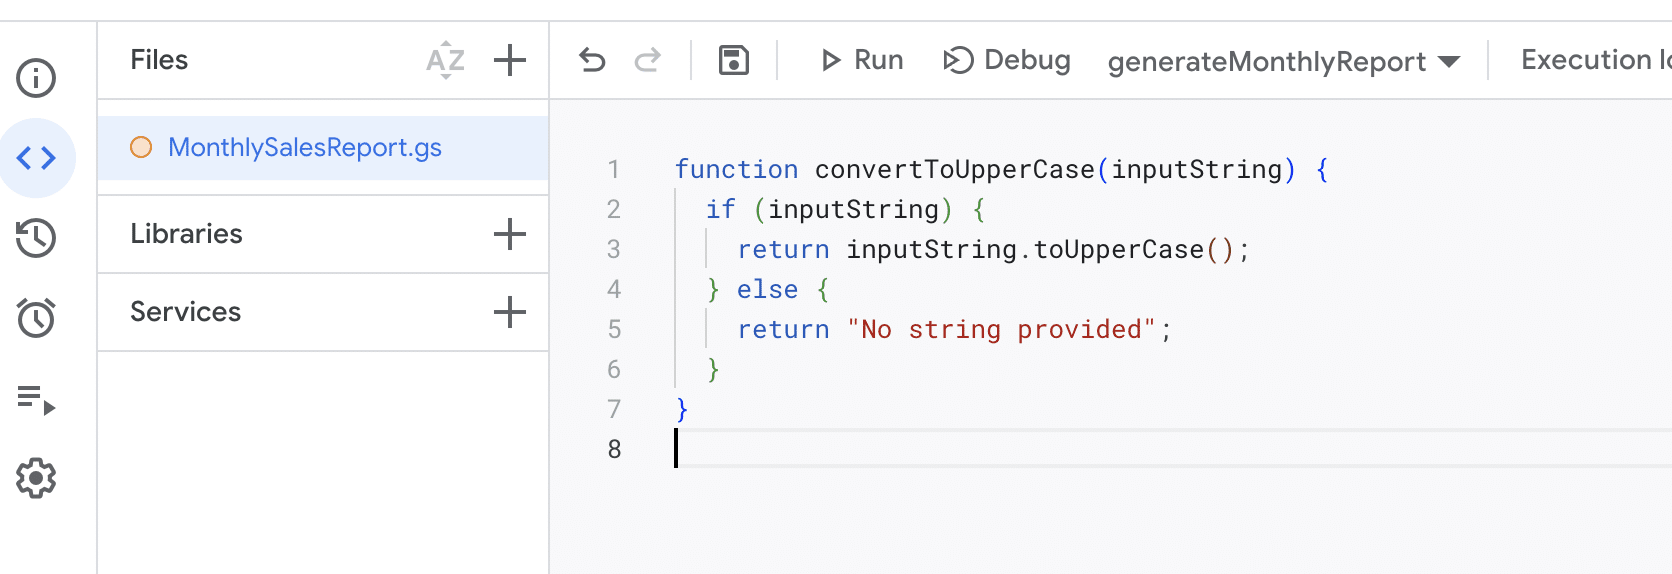 Entering the script code in Google Sheets Script Editor